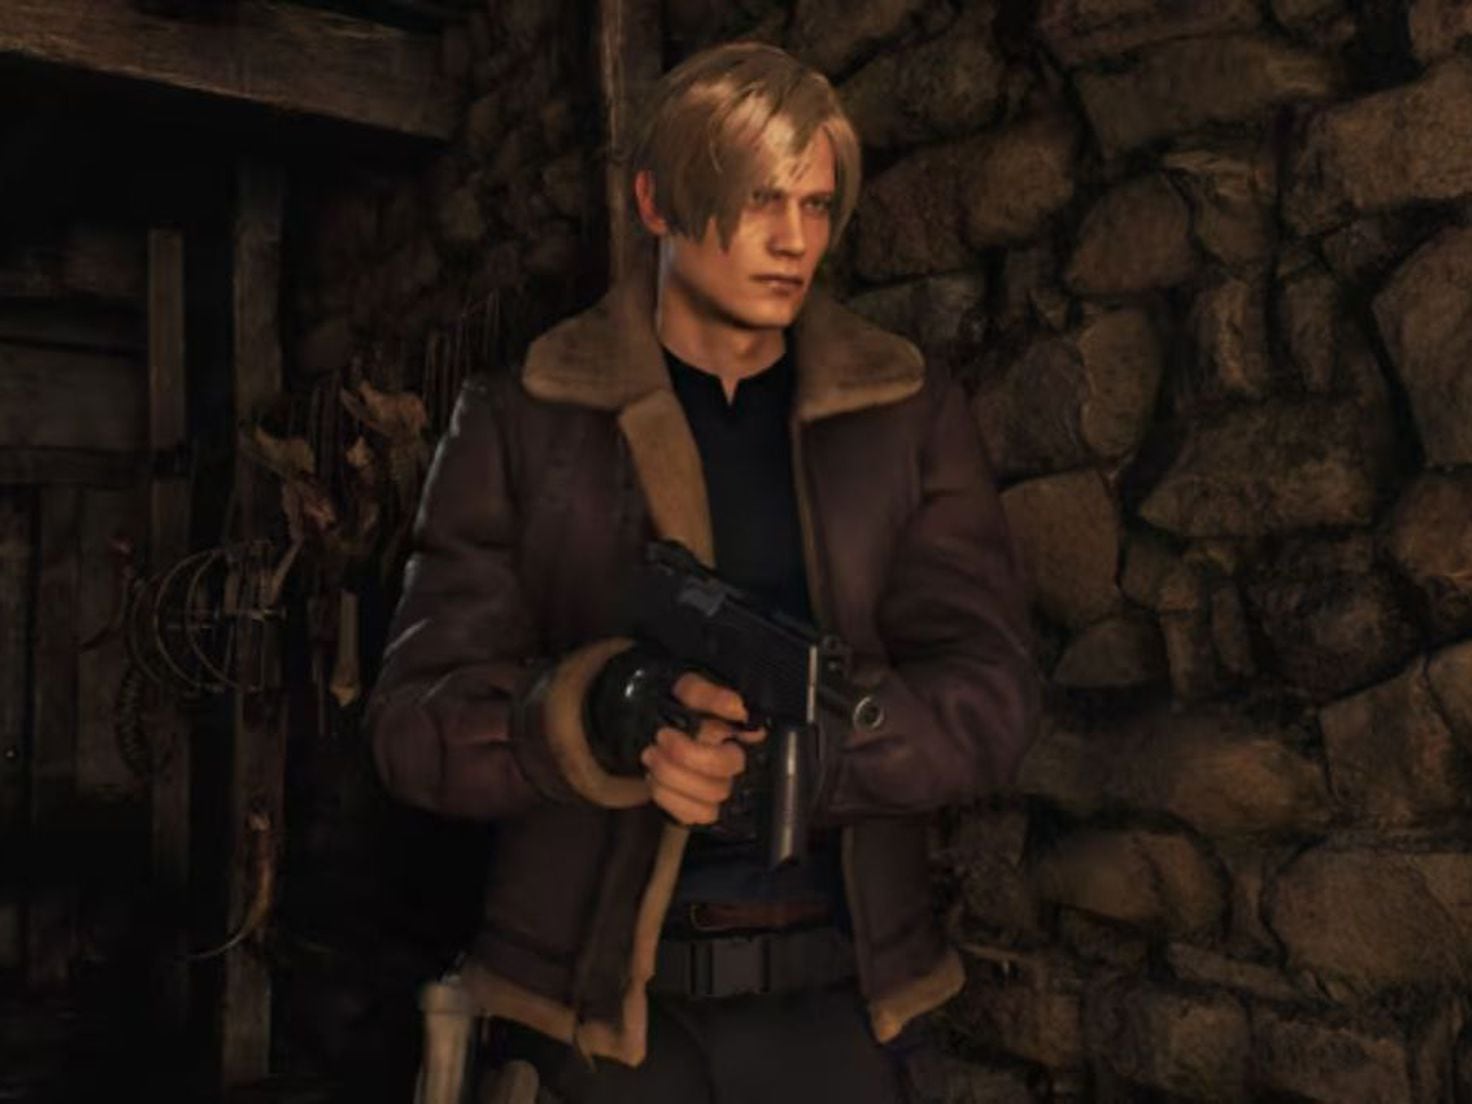 Buy Resident Evil 4 Leon & Ashley Costumes: 'Casual' - Microsoft